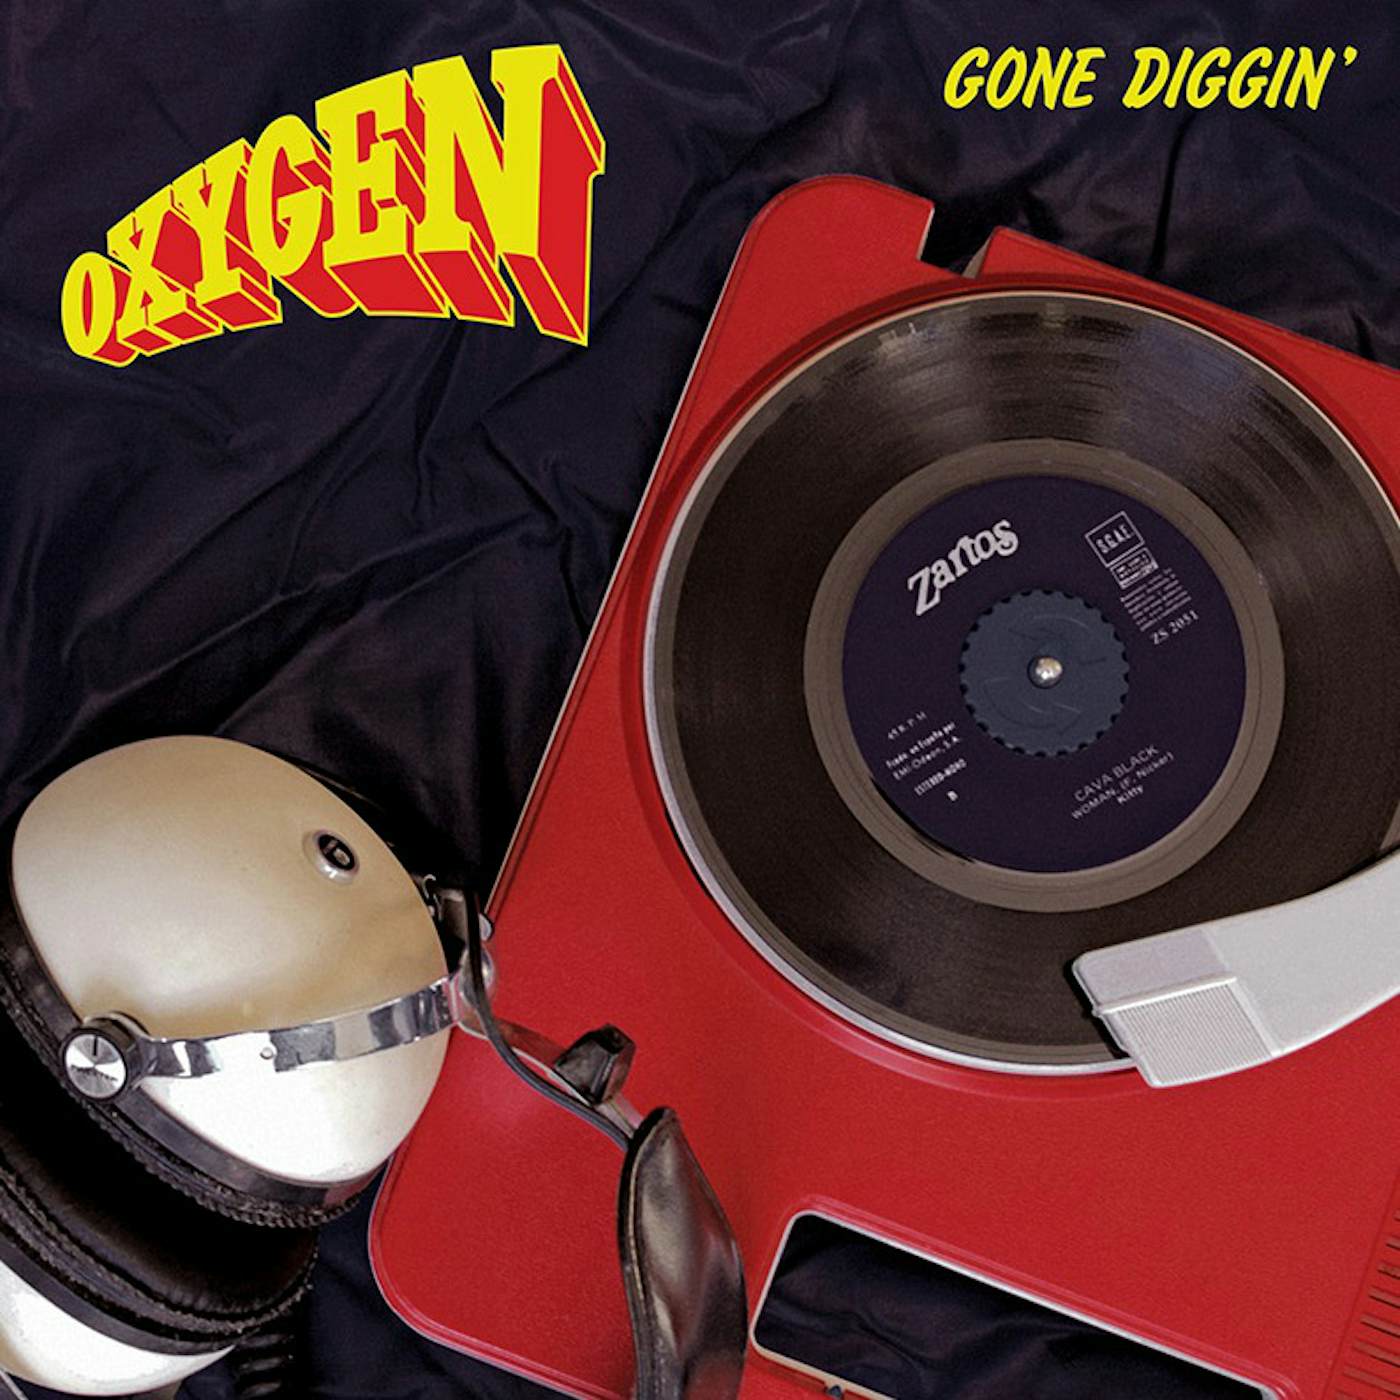 Oxygen GONE DIGGIN Vinyl Record